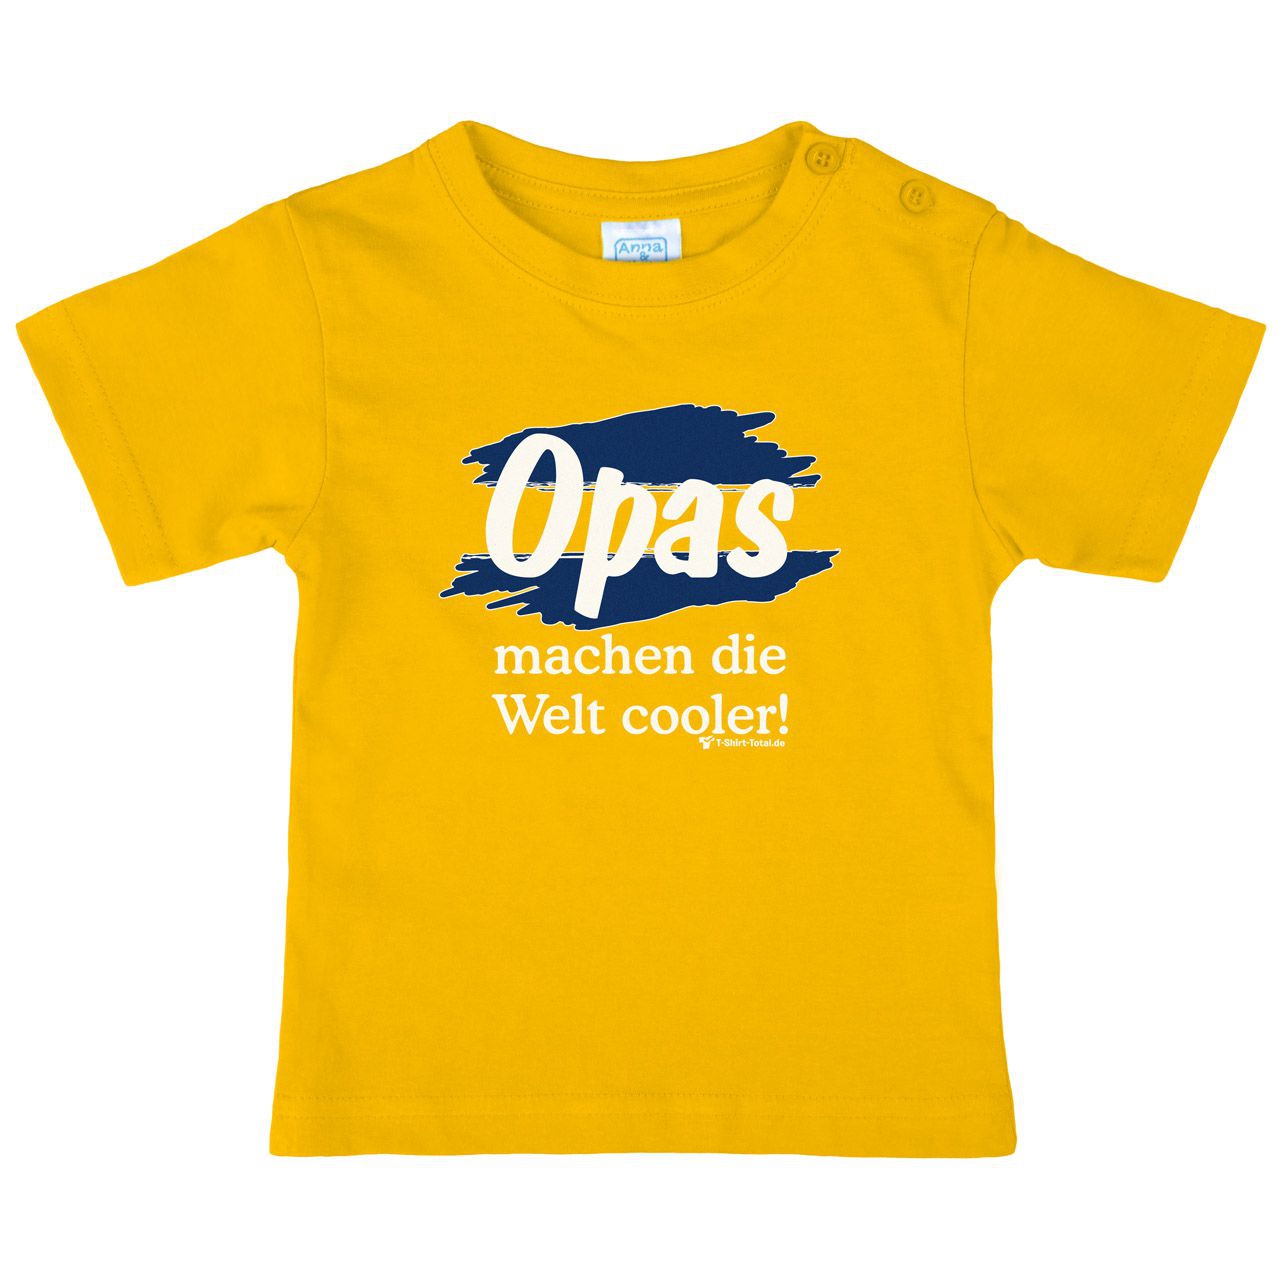 Welt cooler Opa Kinder T-Shirt gelb 92